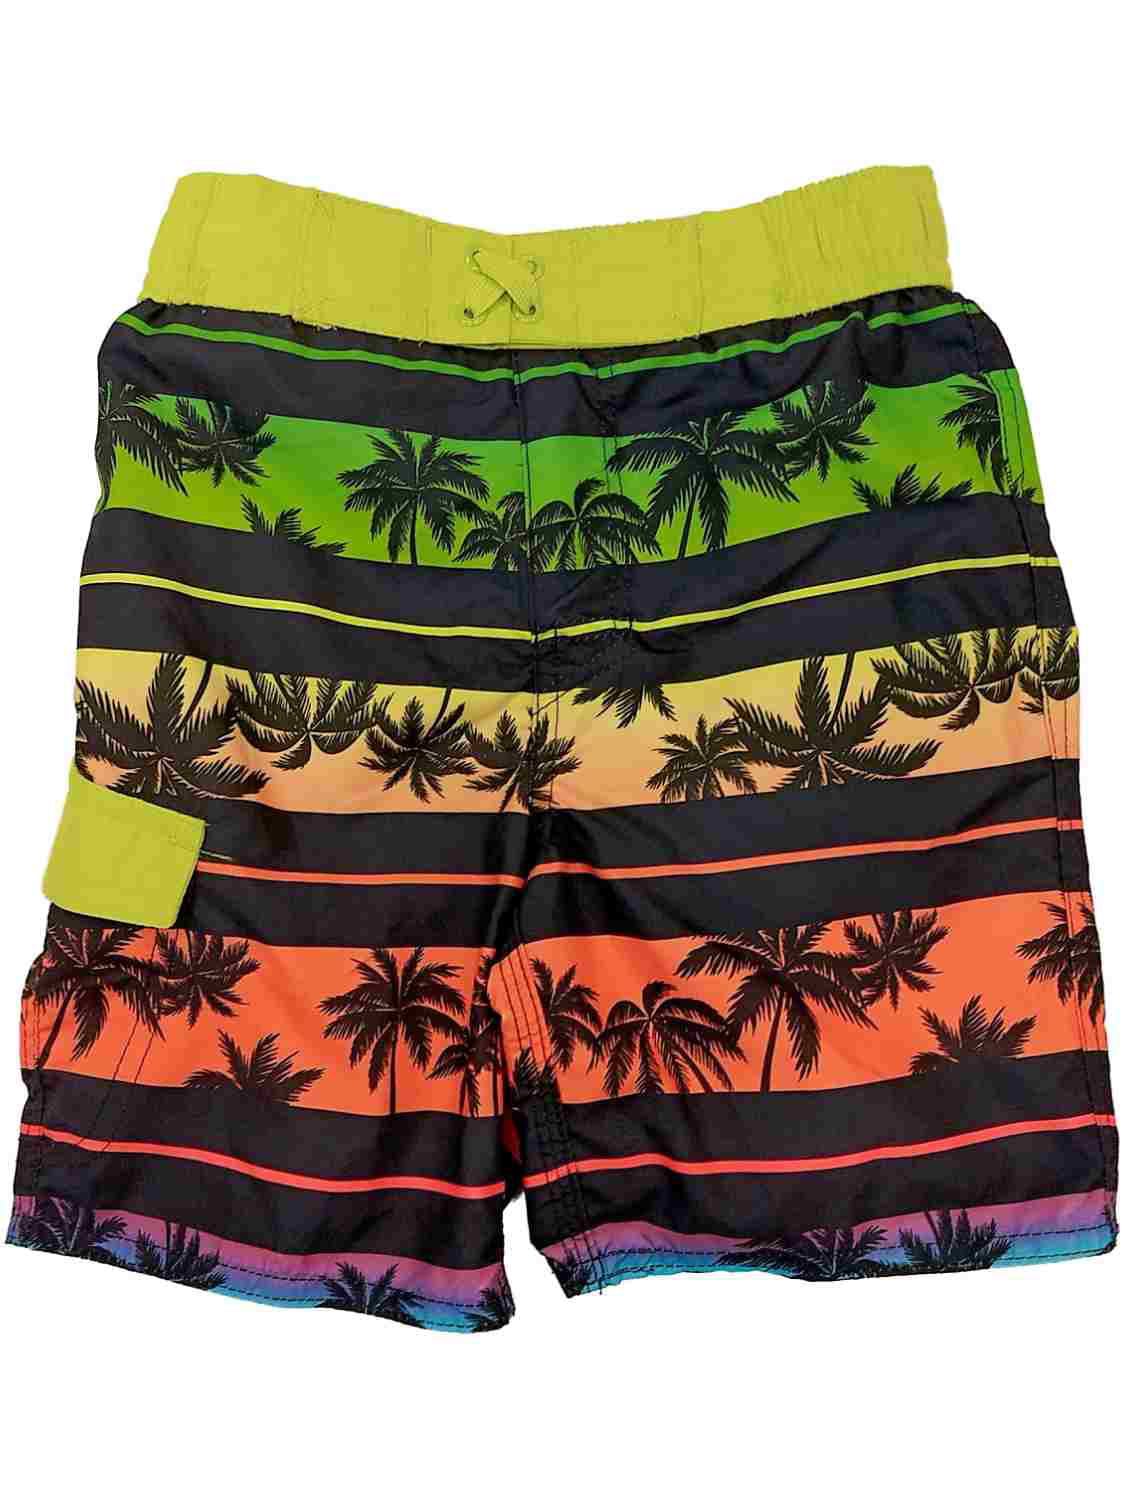 Boys Tropical Orange & Green Stripe Palm Tree Print Swim Trunk Board Shorts  XXS